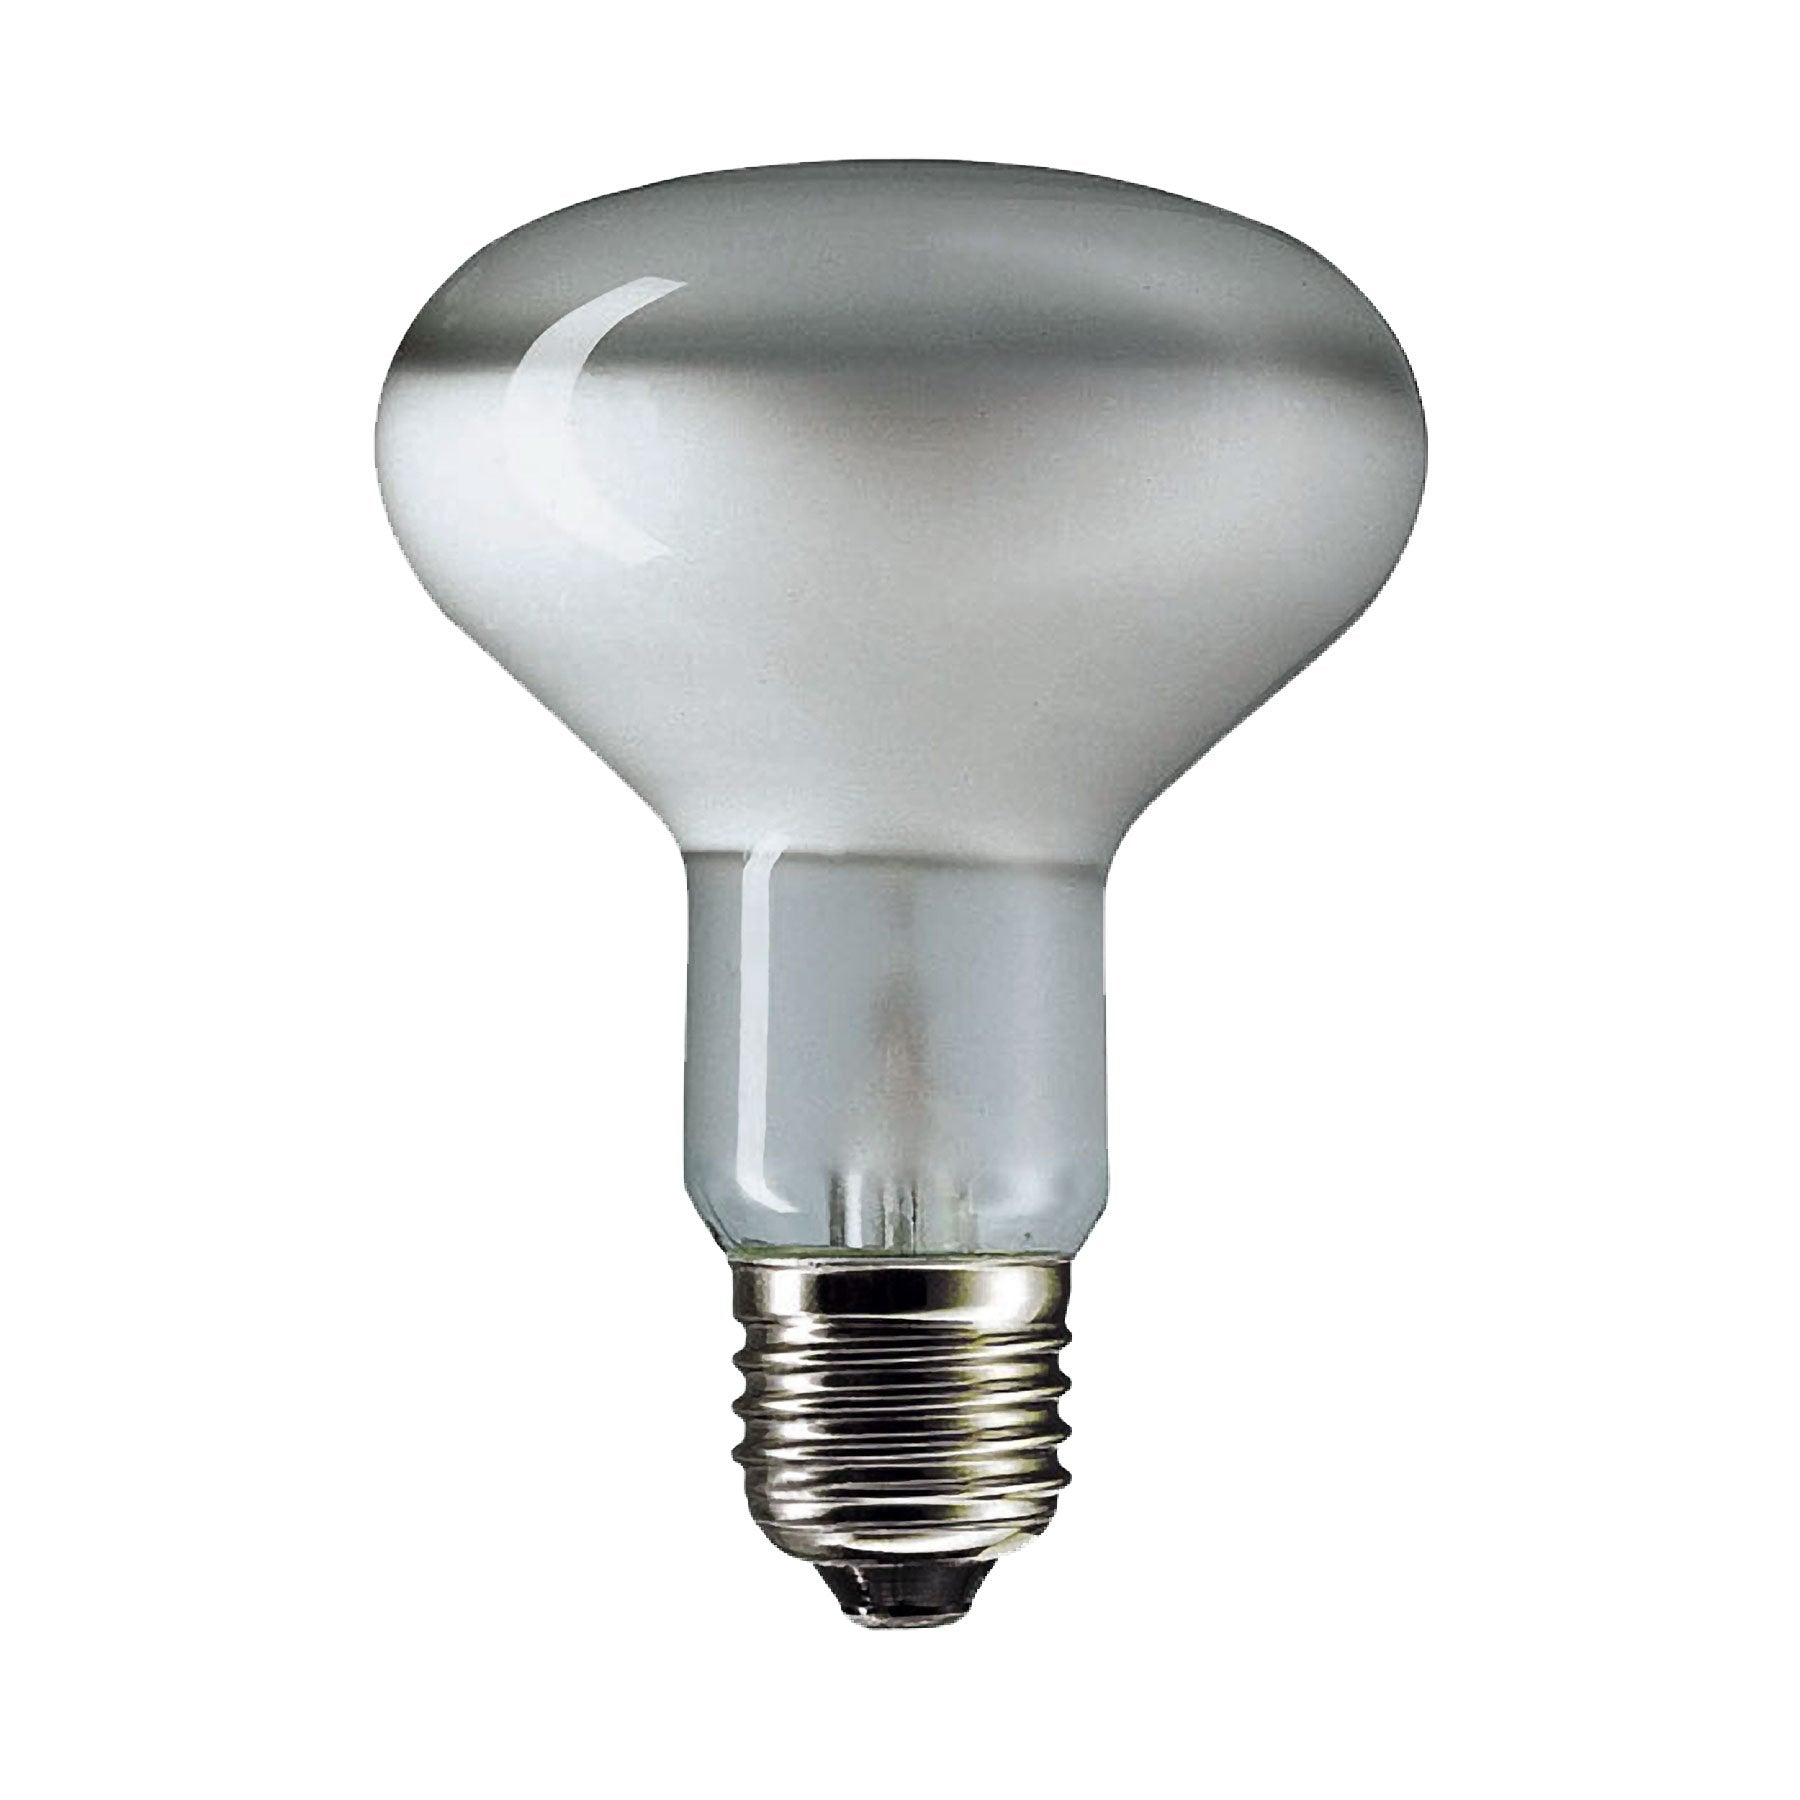 10 x 100w ES,E27 R80 Spotlight Bulb